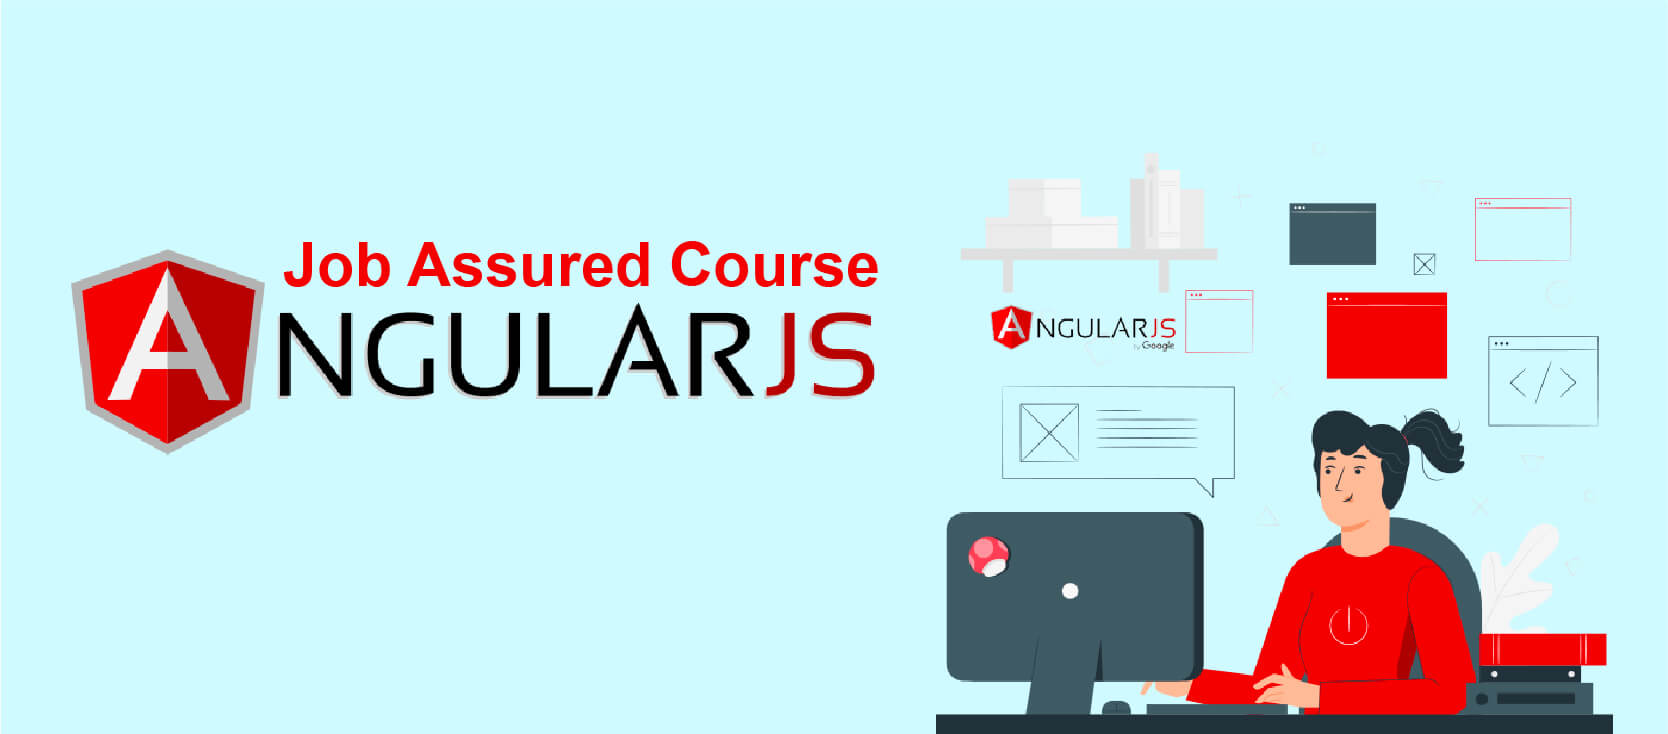 AngularJS Job Assured Course